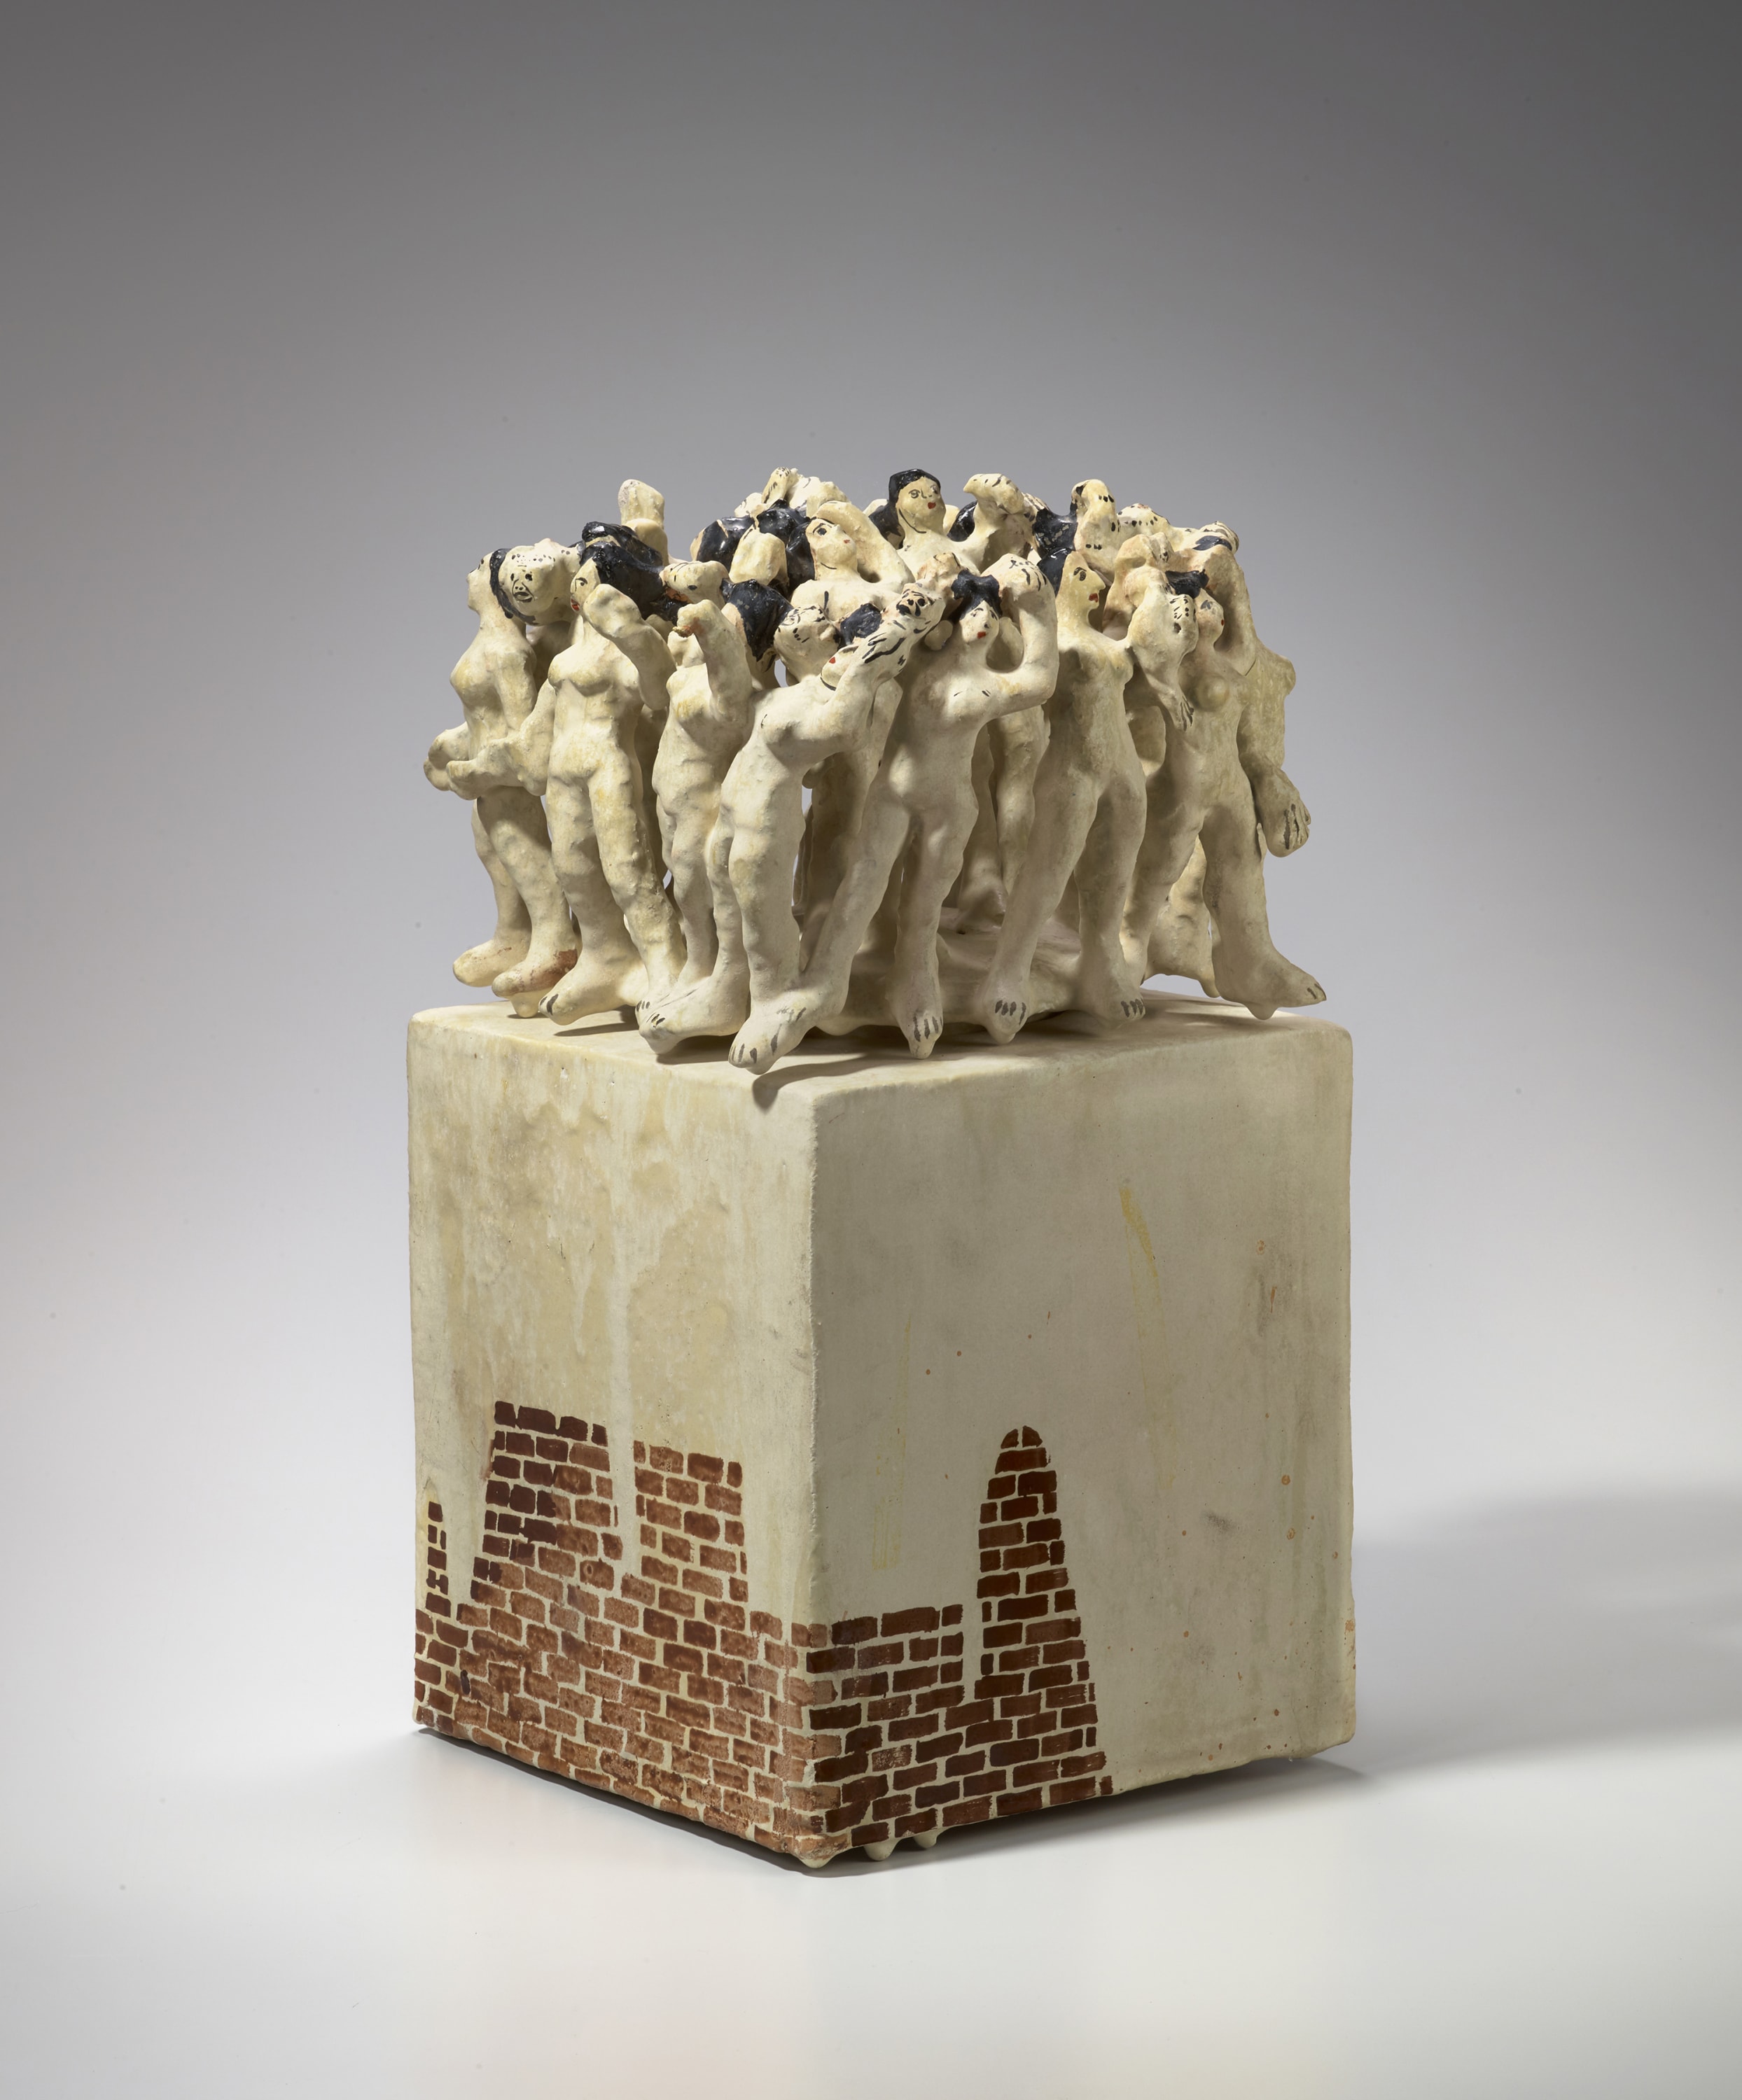 Untitled (Nude Figures on Box with Bricks)